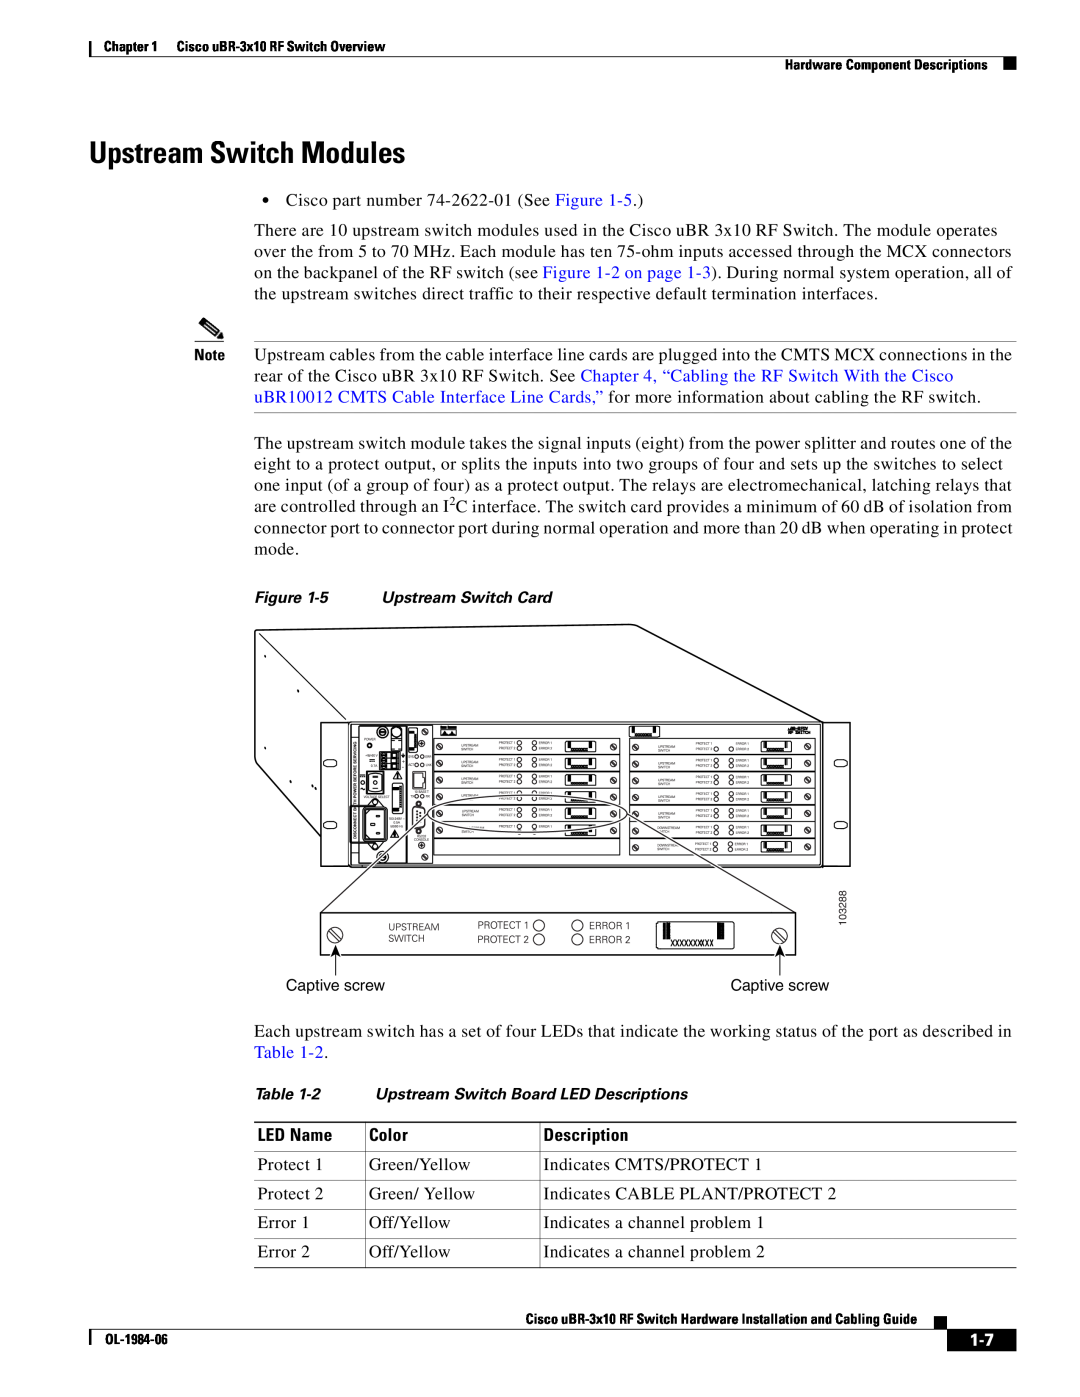 Cisco Systems UBR-3X10 manual Upstream Switch Modules, LED Name, Color, Description 